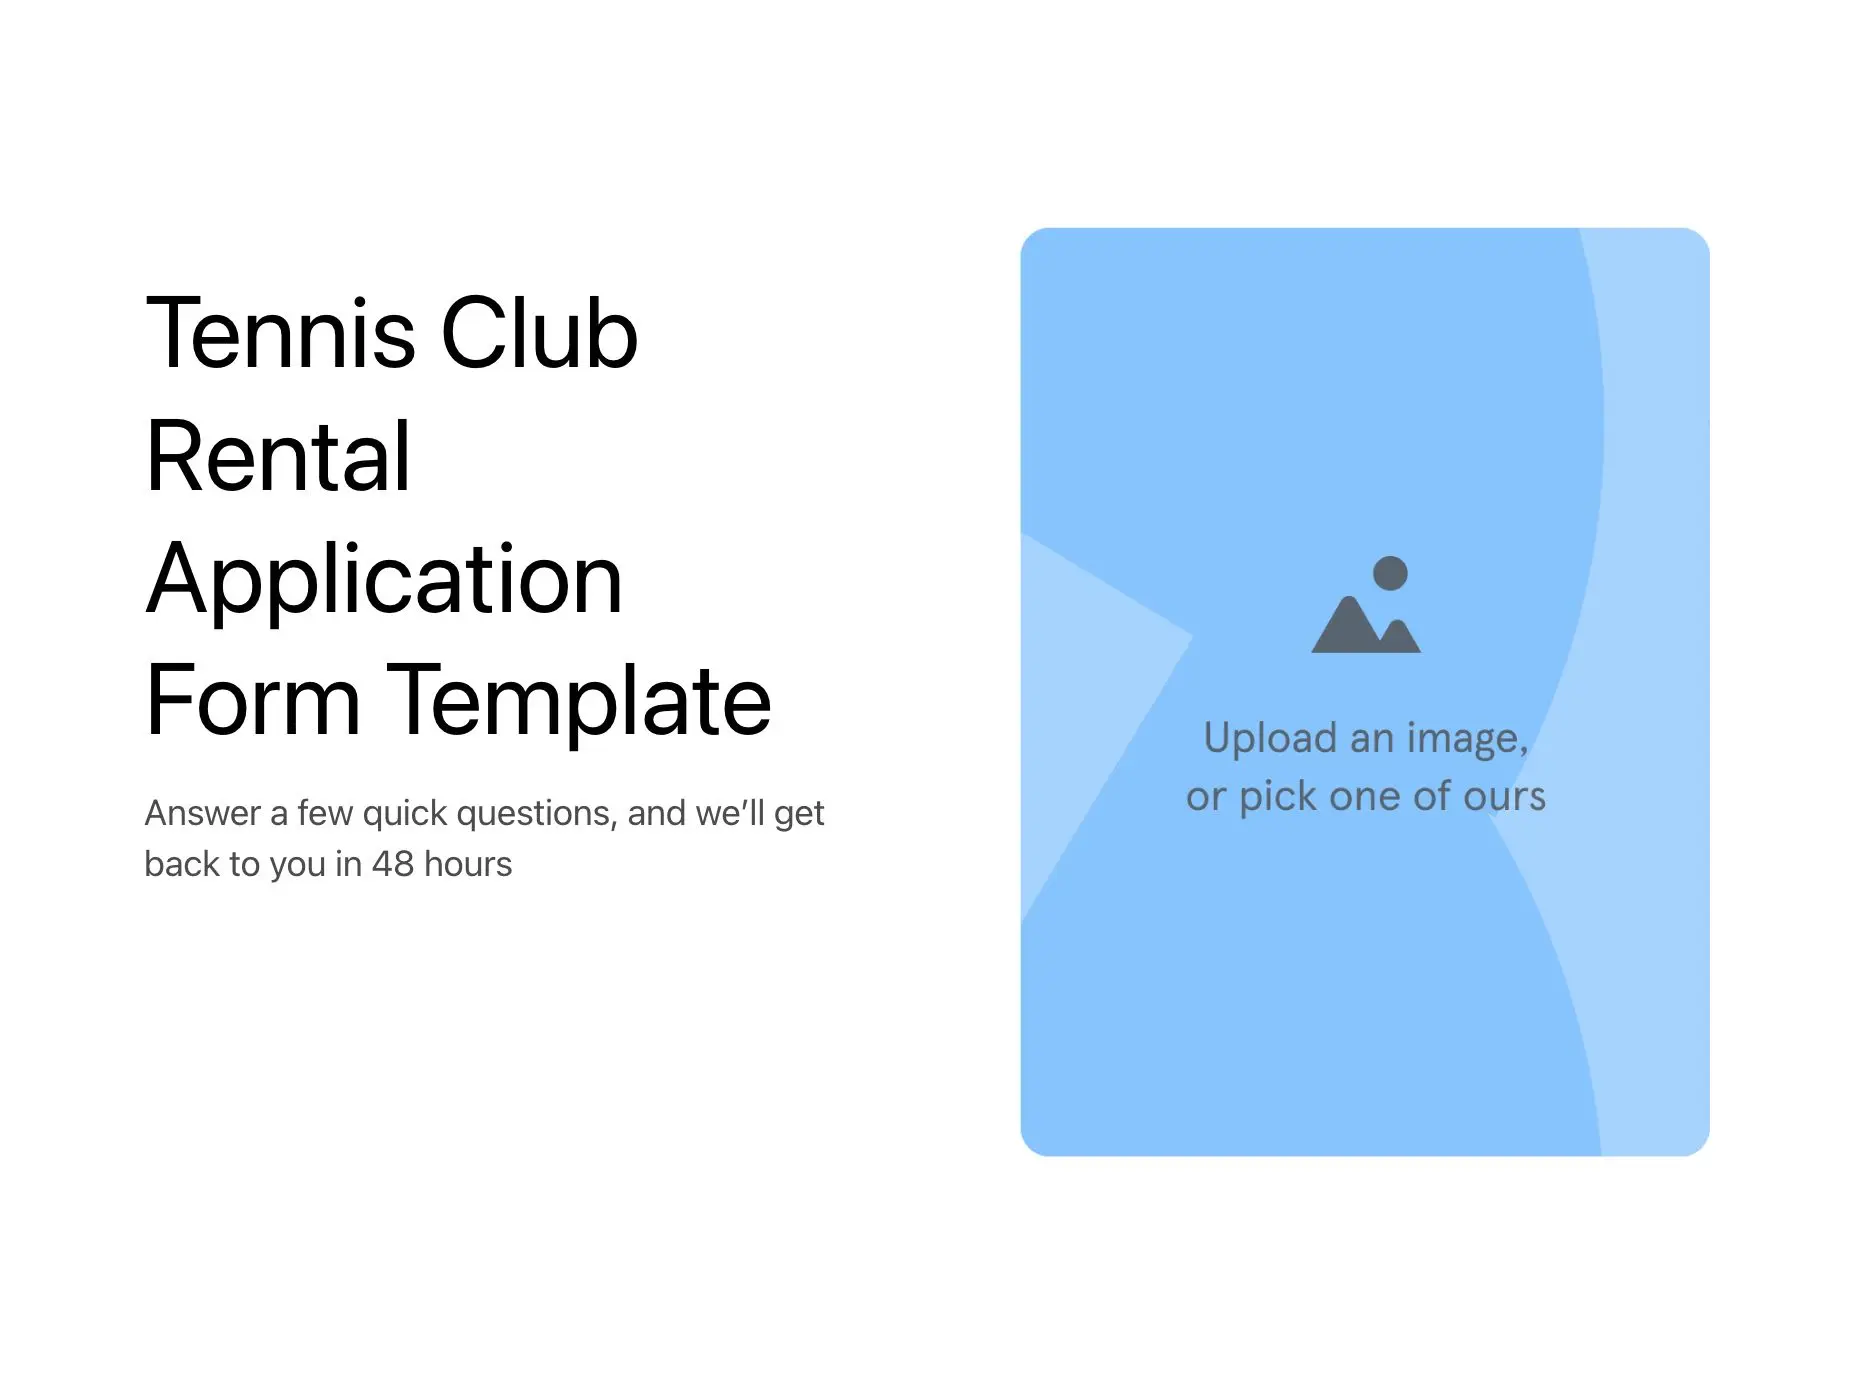 Tennis Club Rental Application Form Template Hero